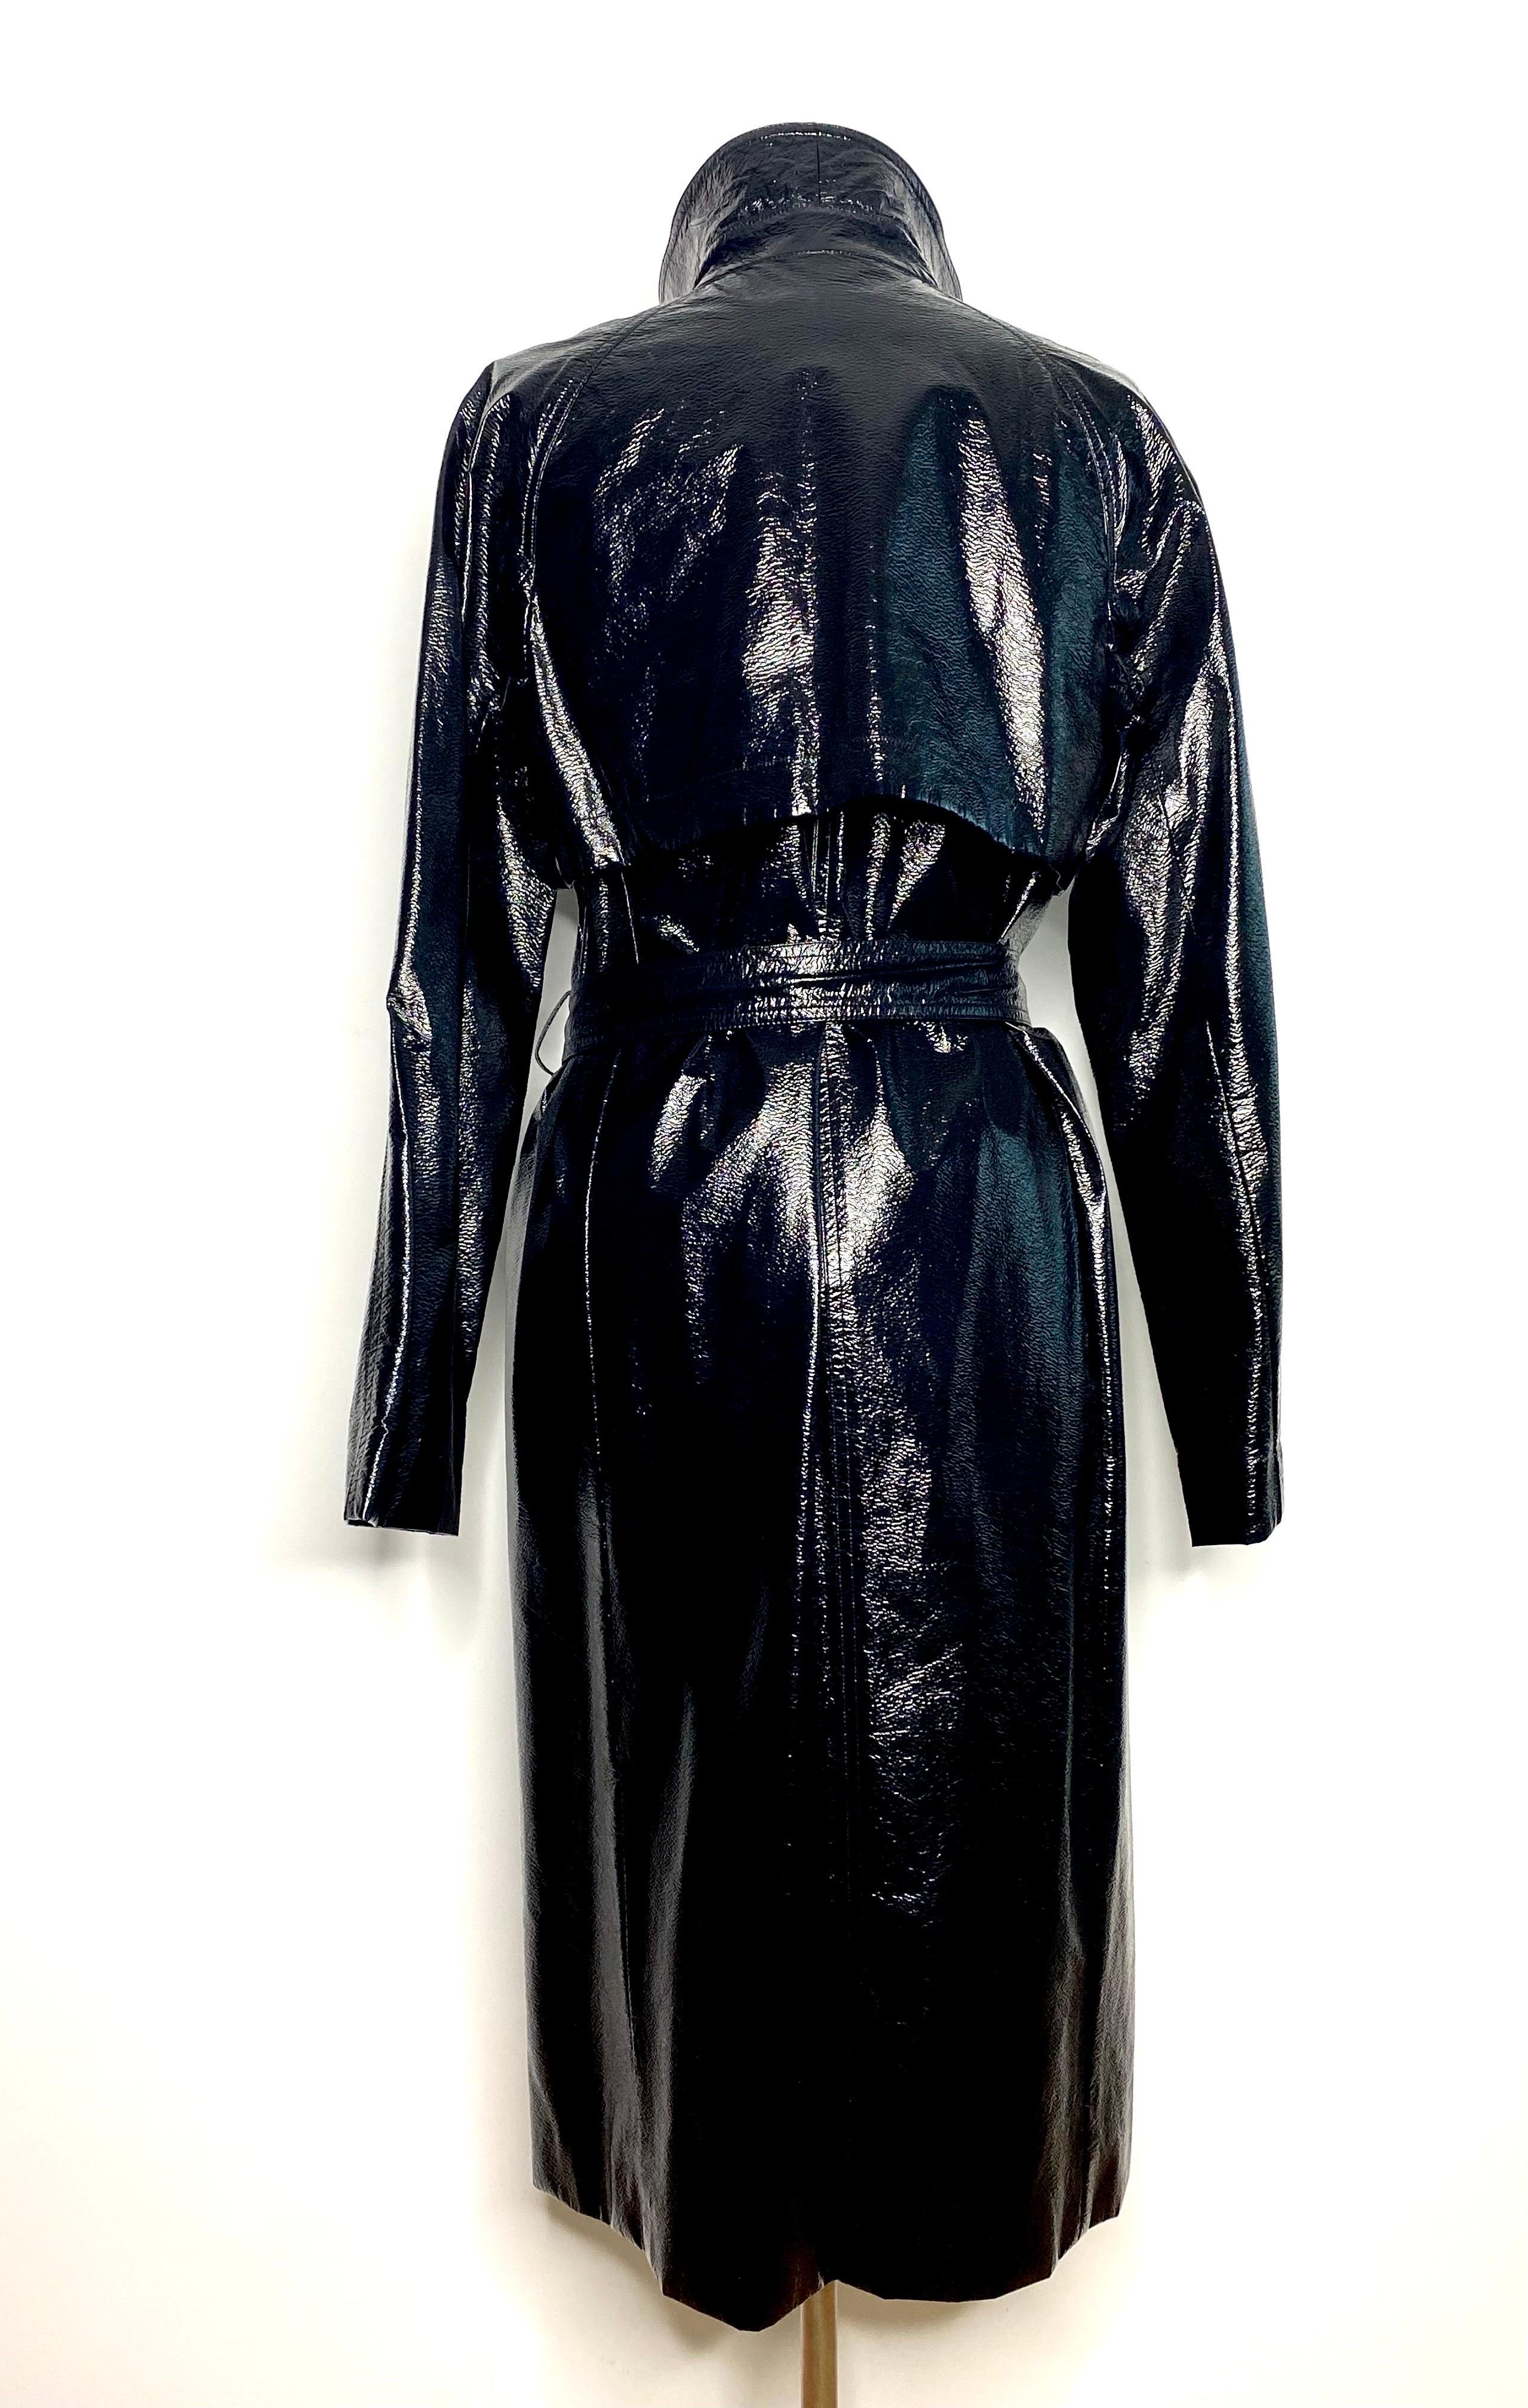 Women's or Men's Yves saint laurent trench coat circa 1990 black patent